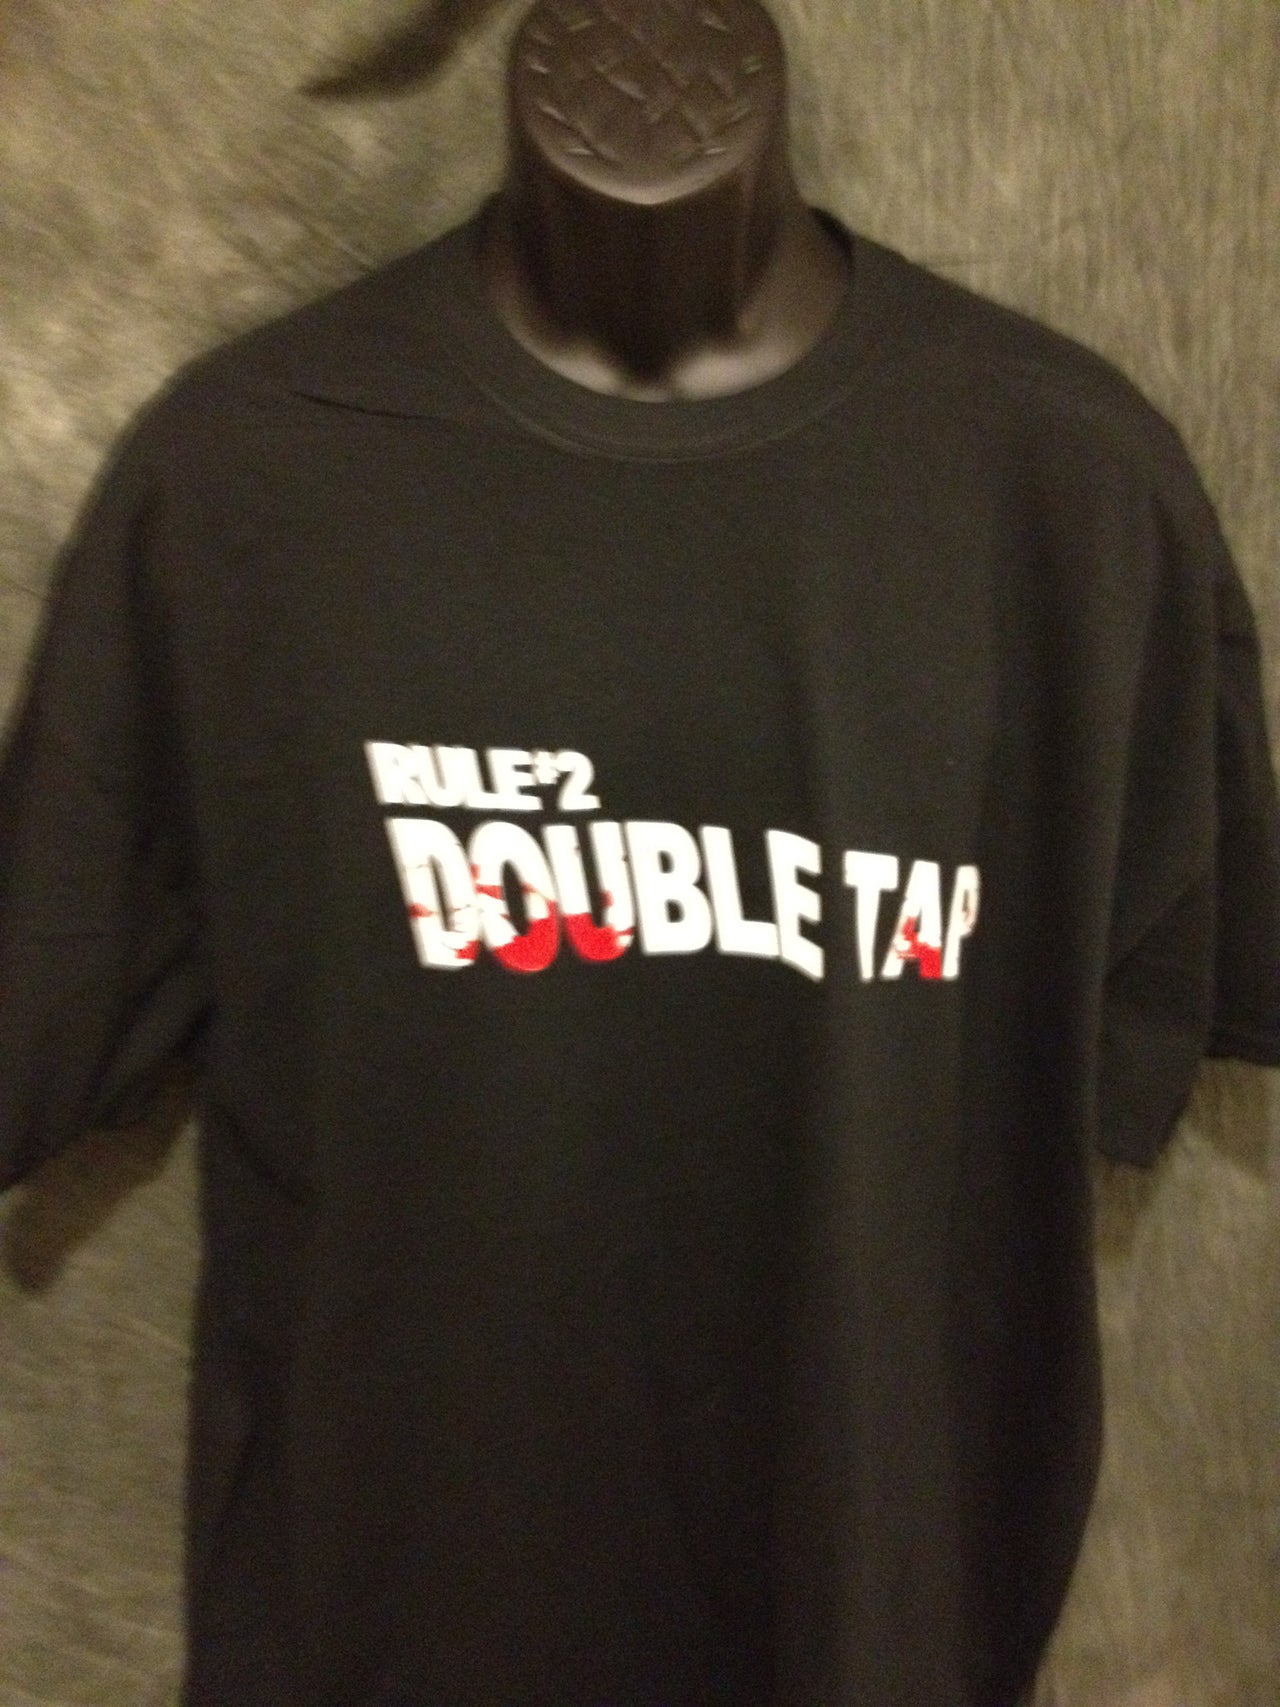 Rule # 2 Double Tap Rule 2 Tshirt - TshirtNow.net - 5